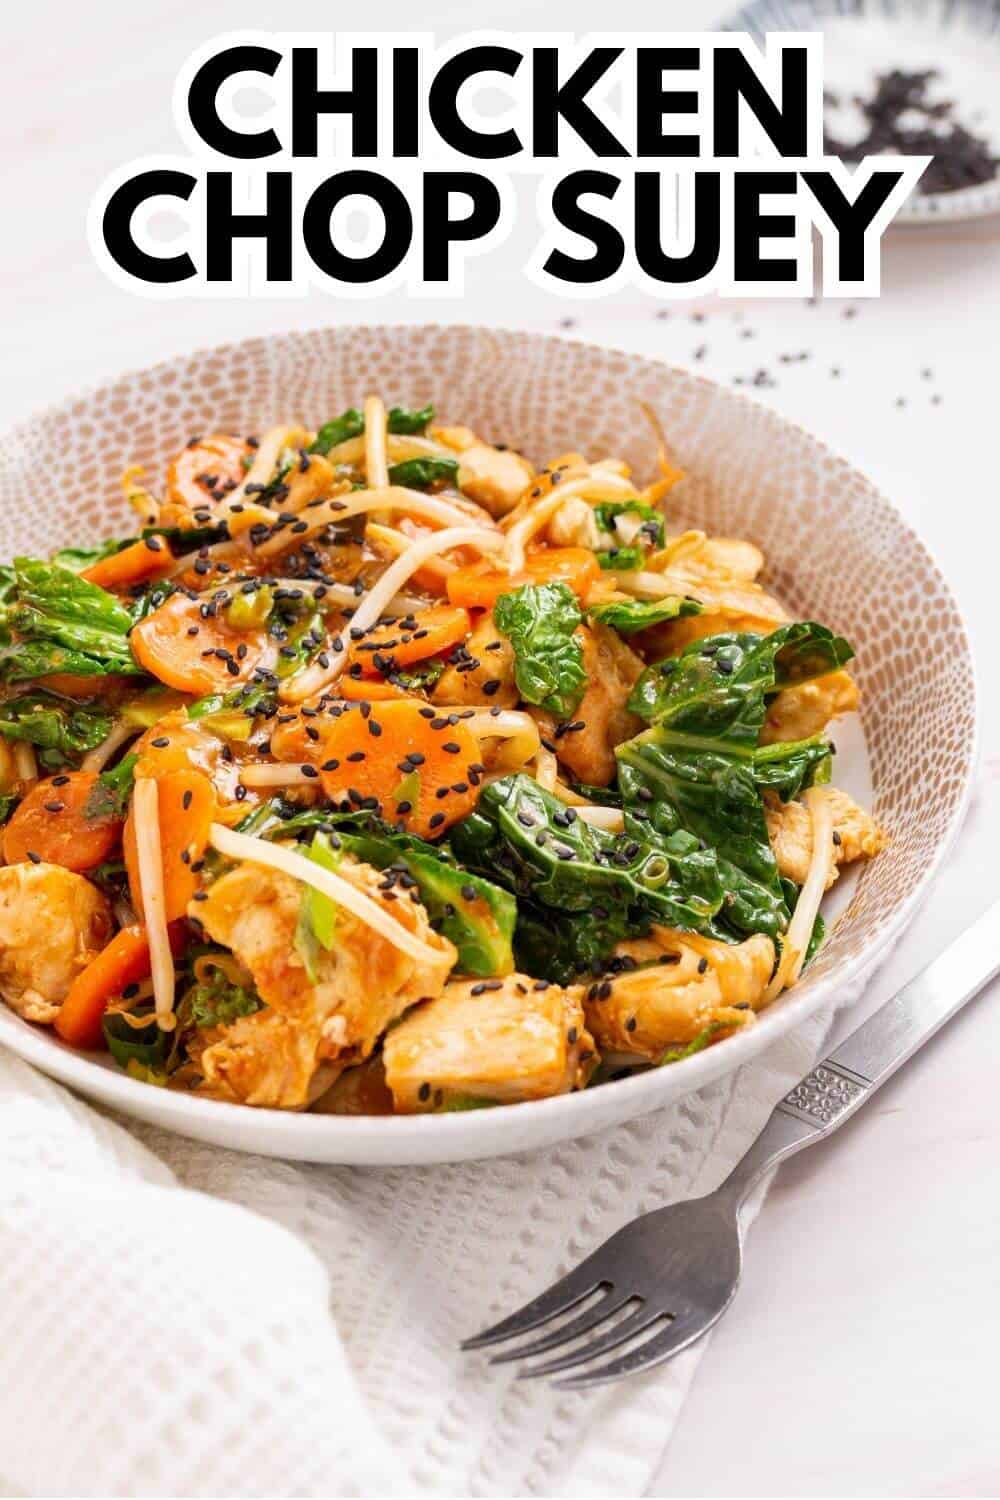 Chicken chop suey with text overlay.